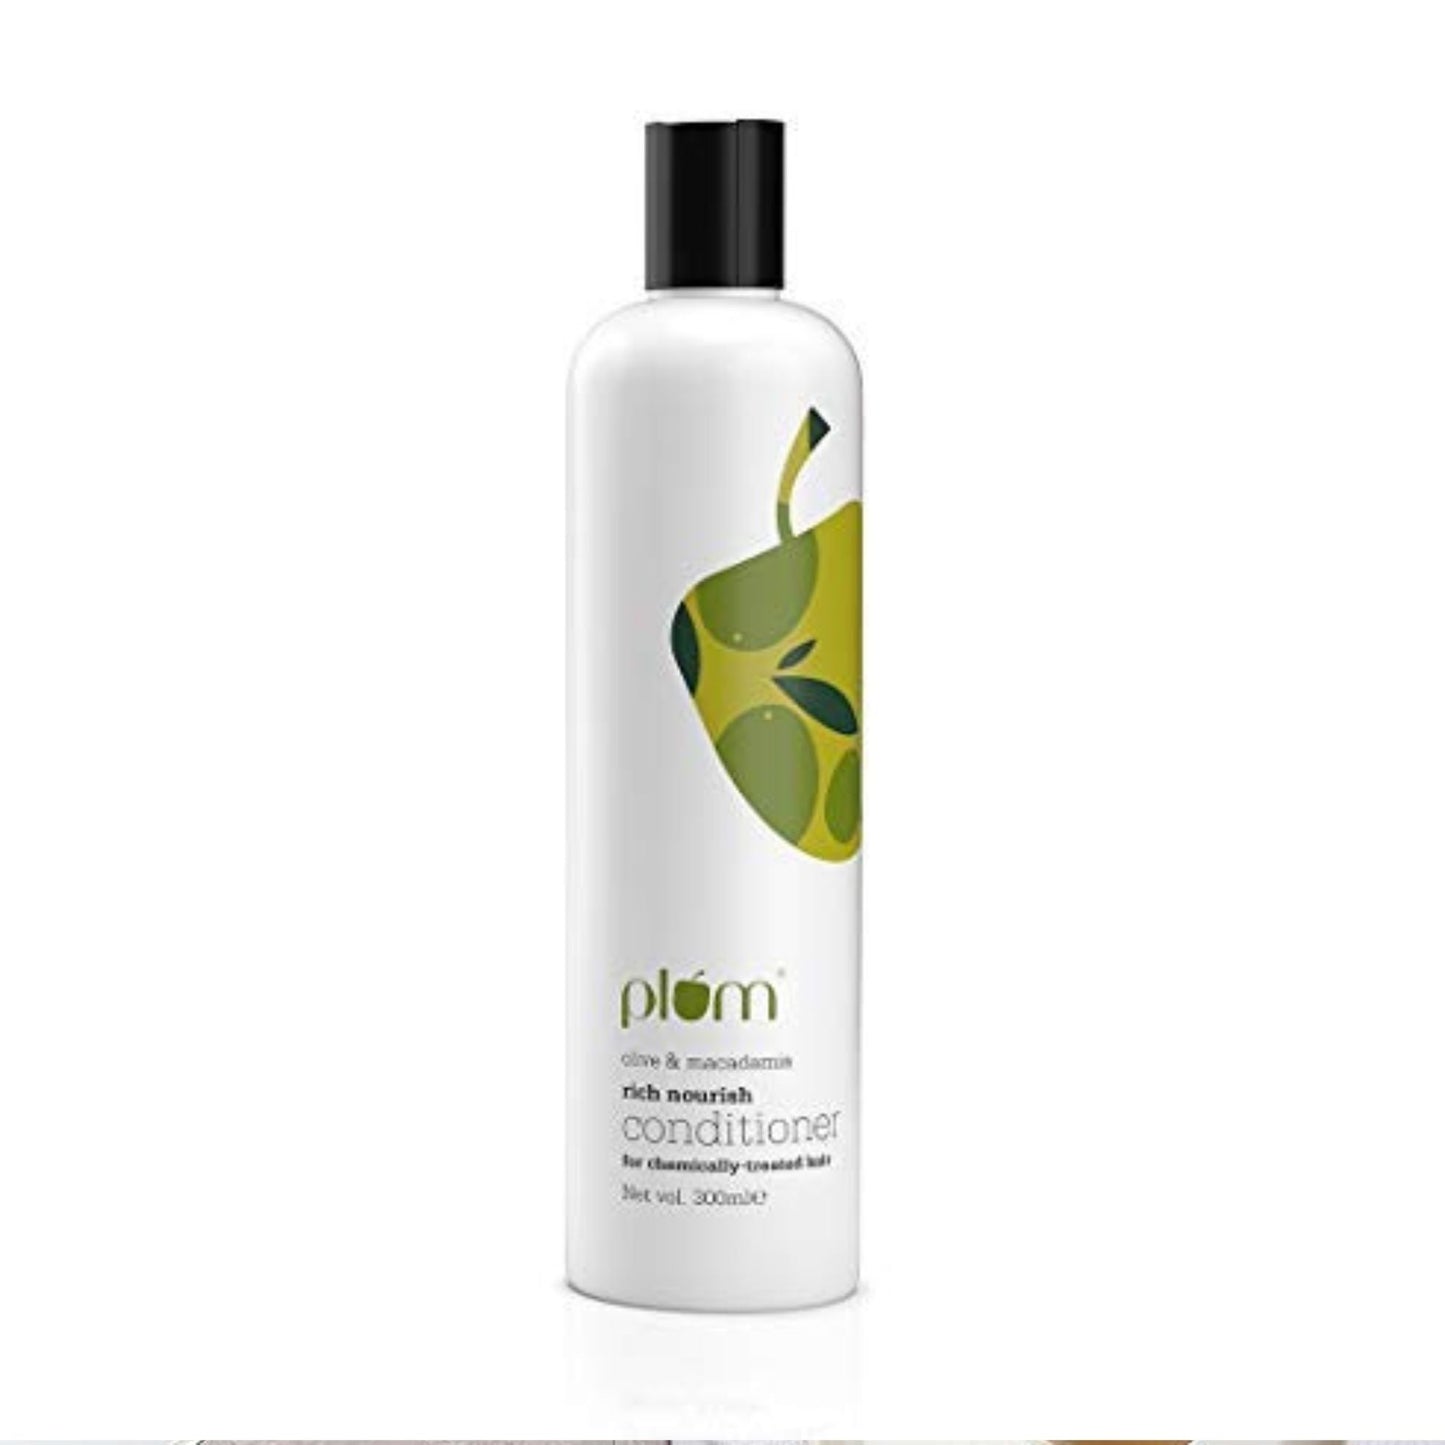 Plum Olive & Macadamia Rich Nourish Hair Conditioner | Dull, Dry, Damaged Hair | 100% Vegan | Silicone Free SLS-Free | Damage Repair | For chemically treated hair |100% Vegan | 300ml